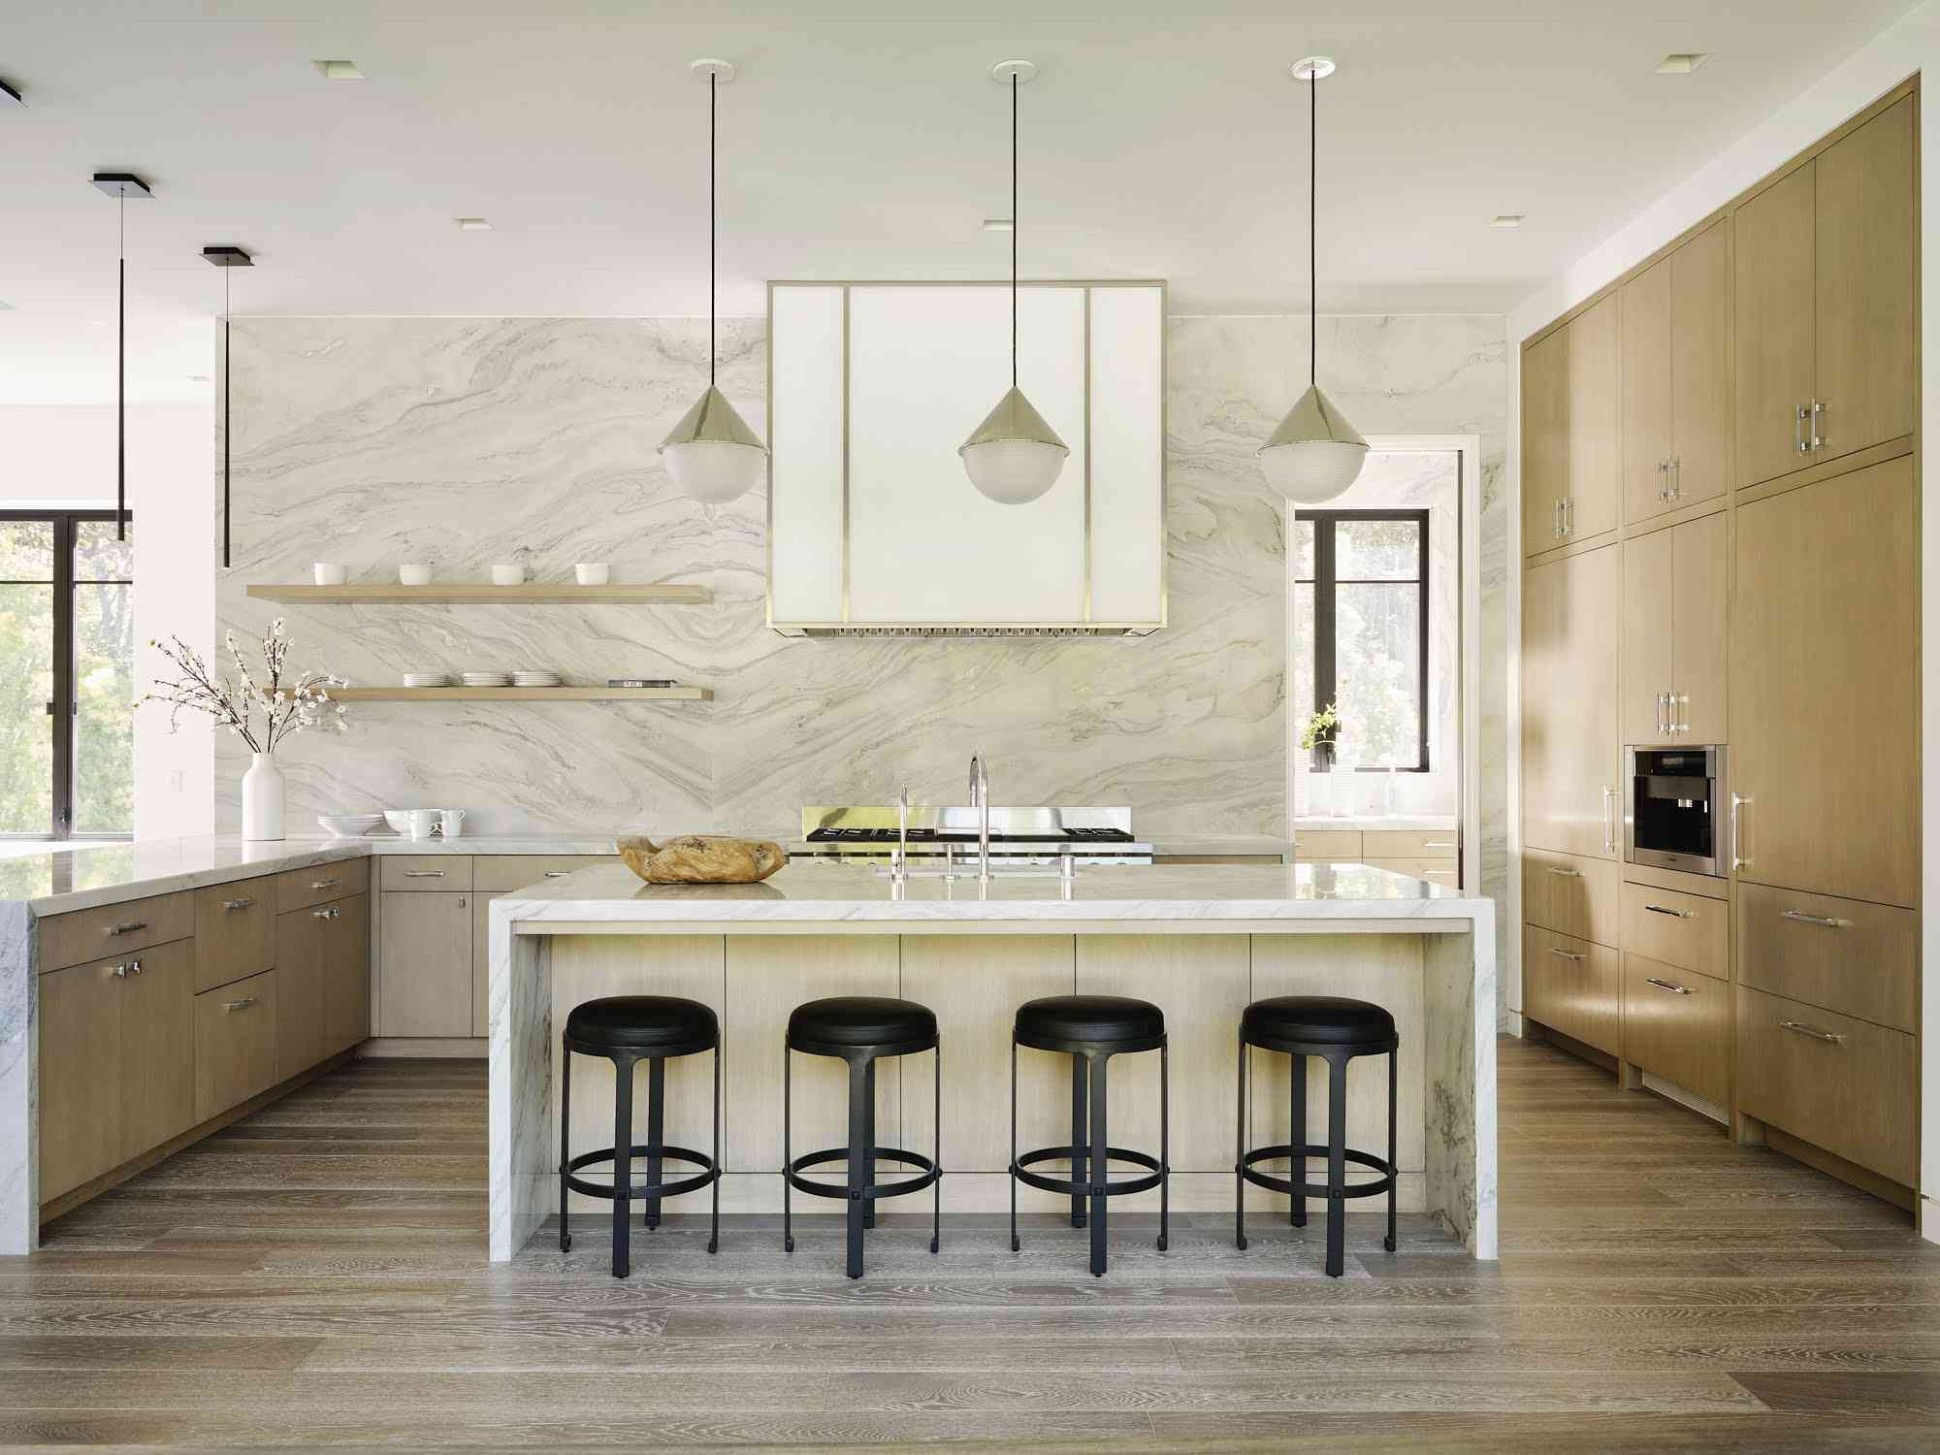 4 Polished Modern Kitchen Design Ideas to Consider - modern kitchen design ideas photos